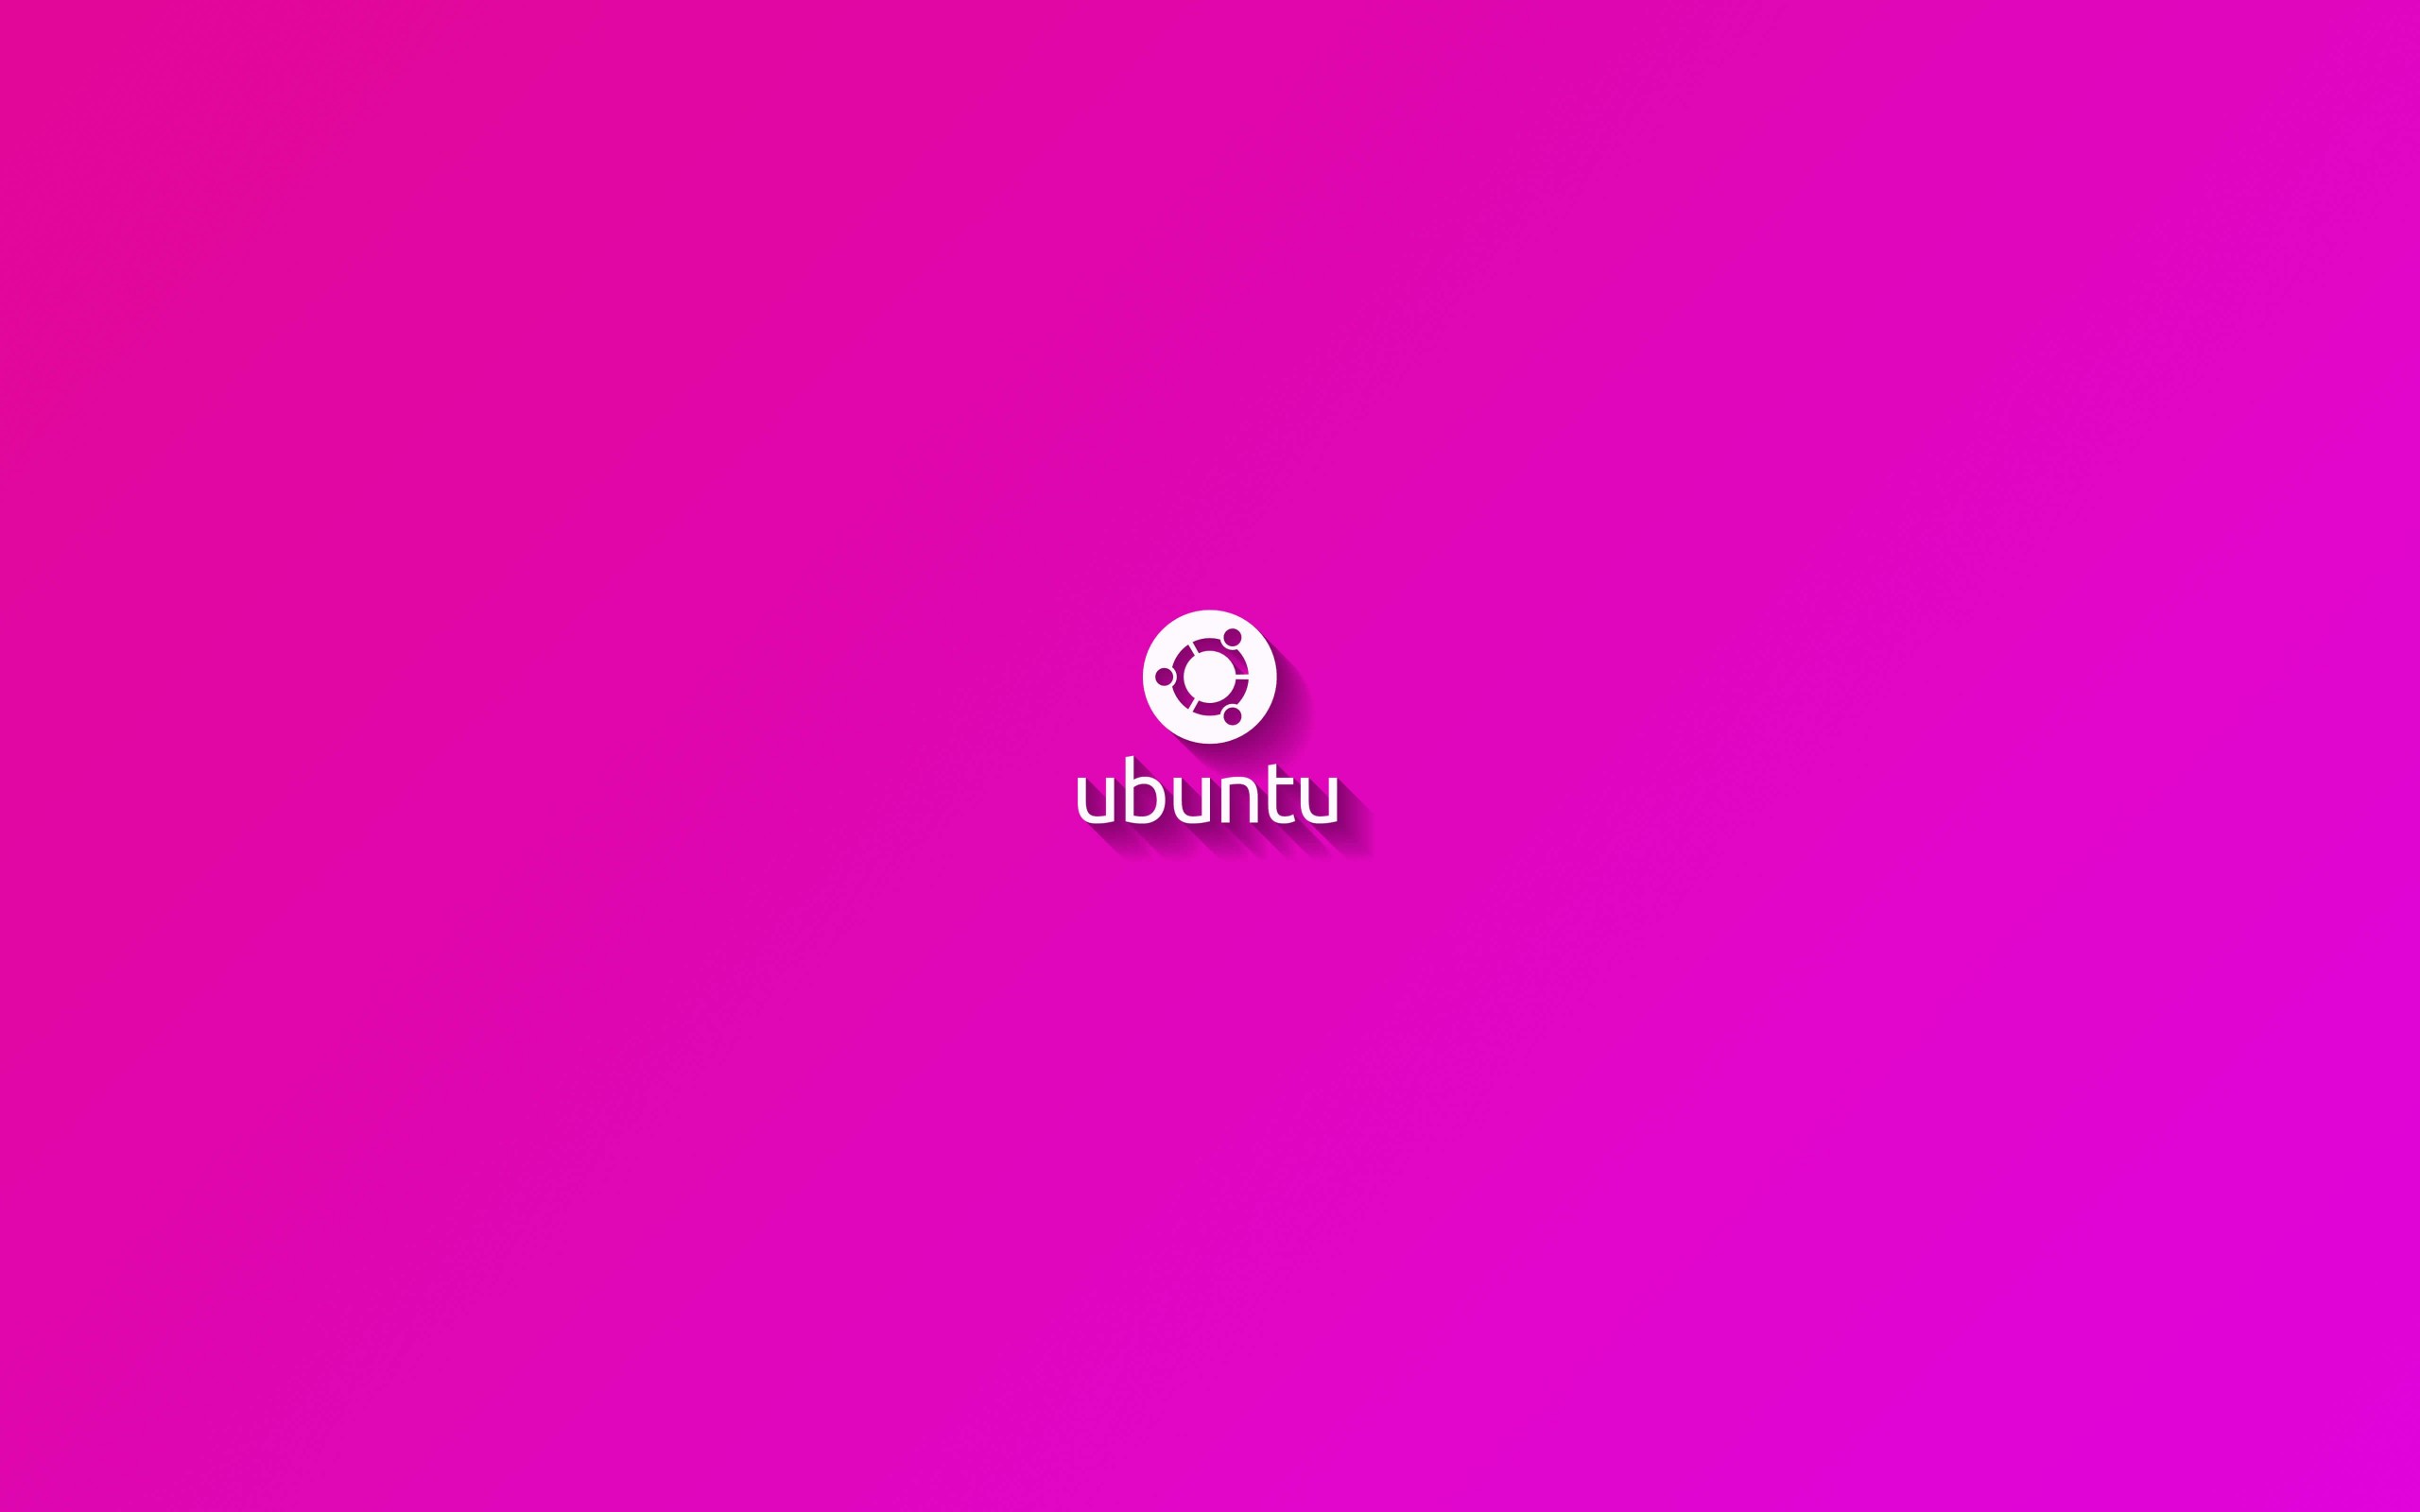 Ubuntu Flat Shadow Pink Wallpaper for Desktop 2560x1600